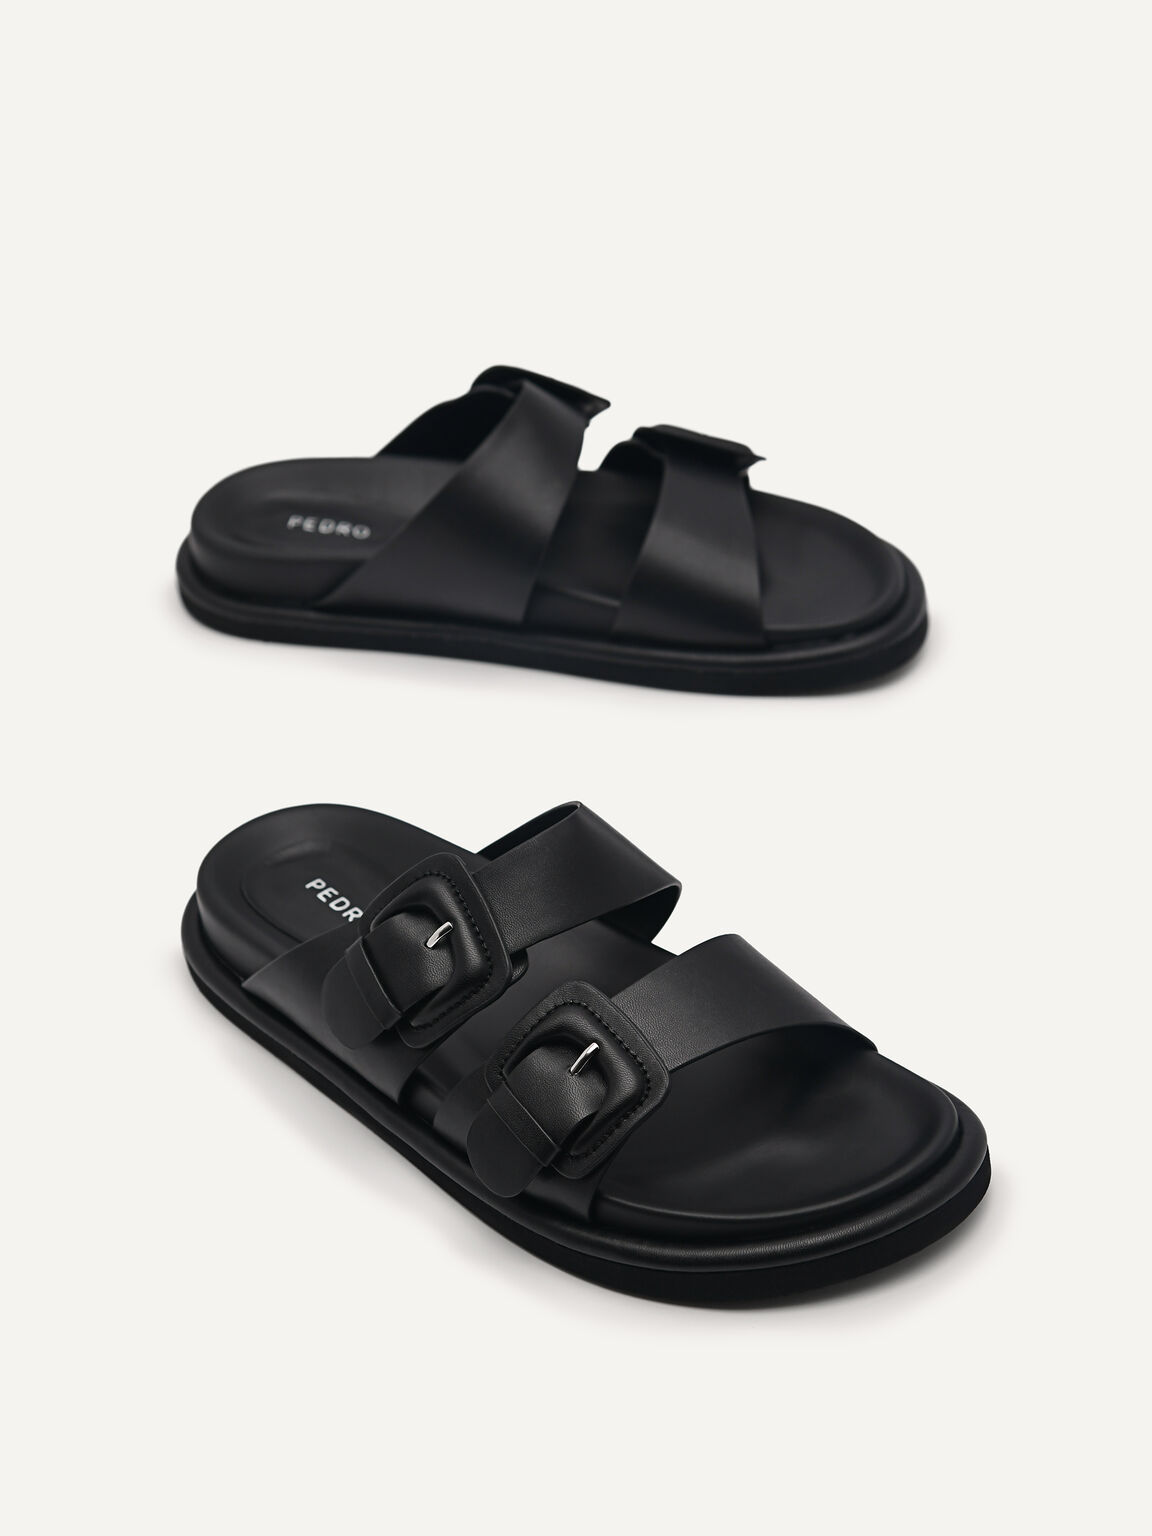 Valenki Flat Sports Sandals, Black